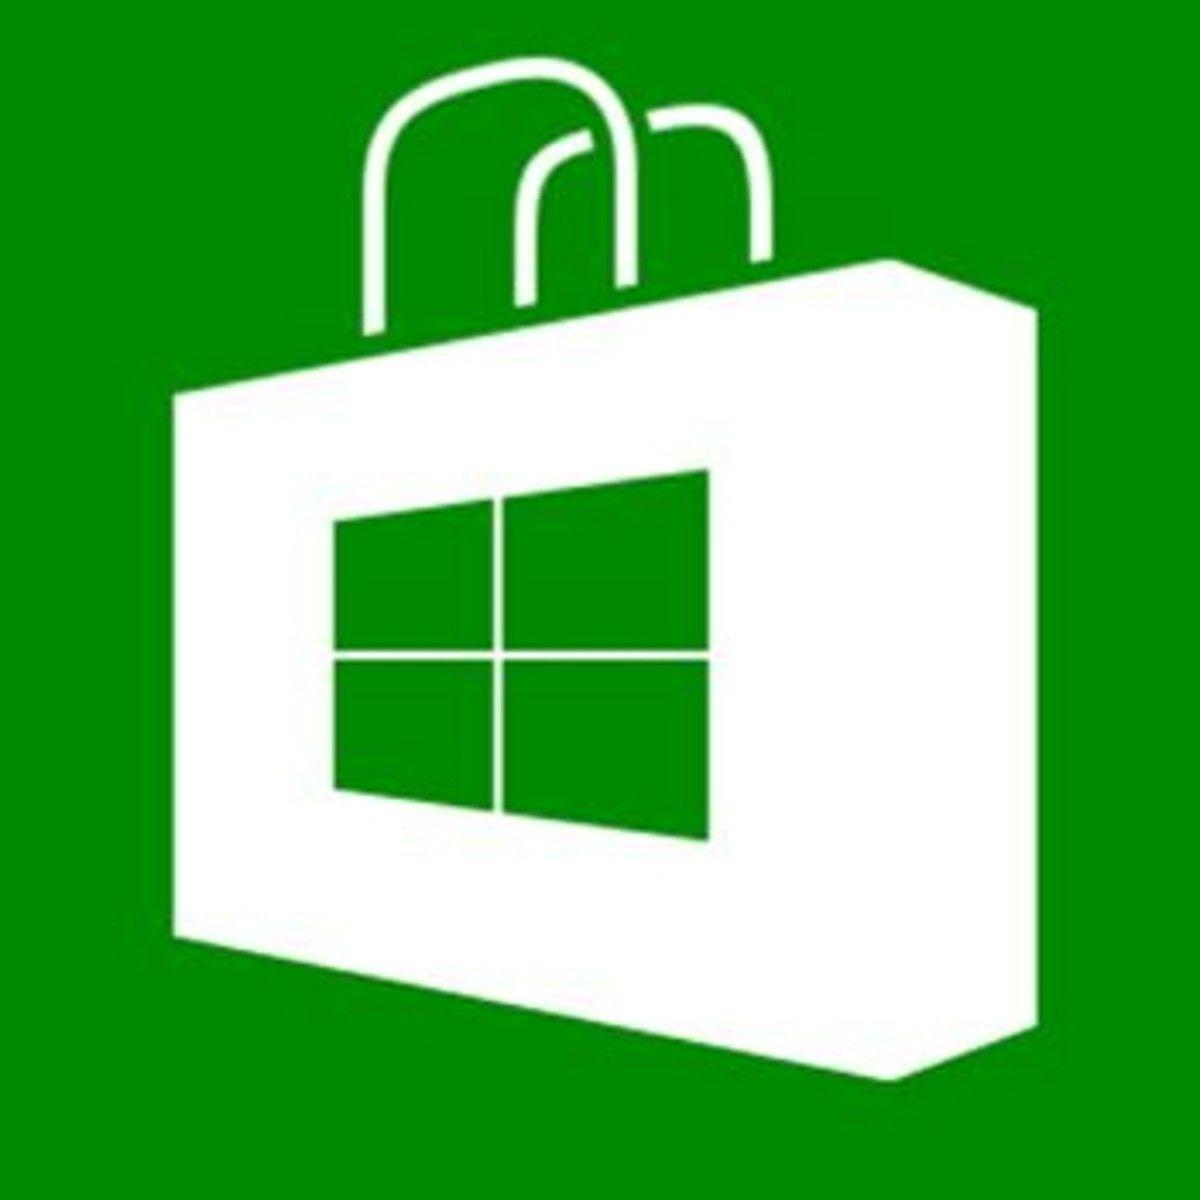 Windows App Store Logo - Microsoft's Windows 8 store reaches 100k apps in seven months - PC ...